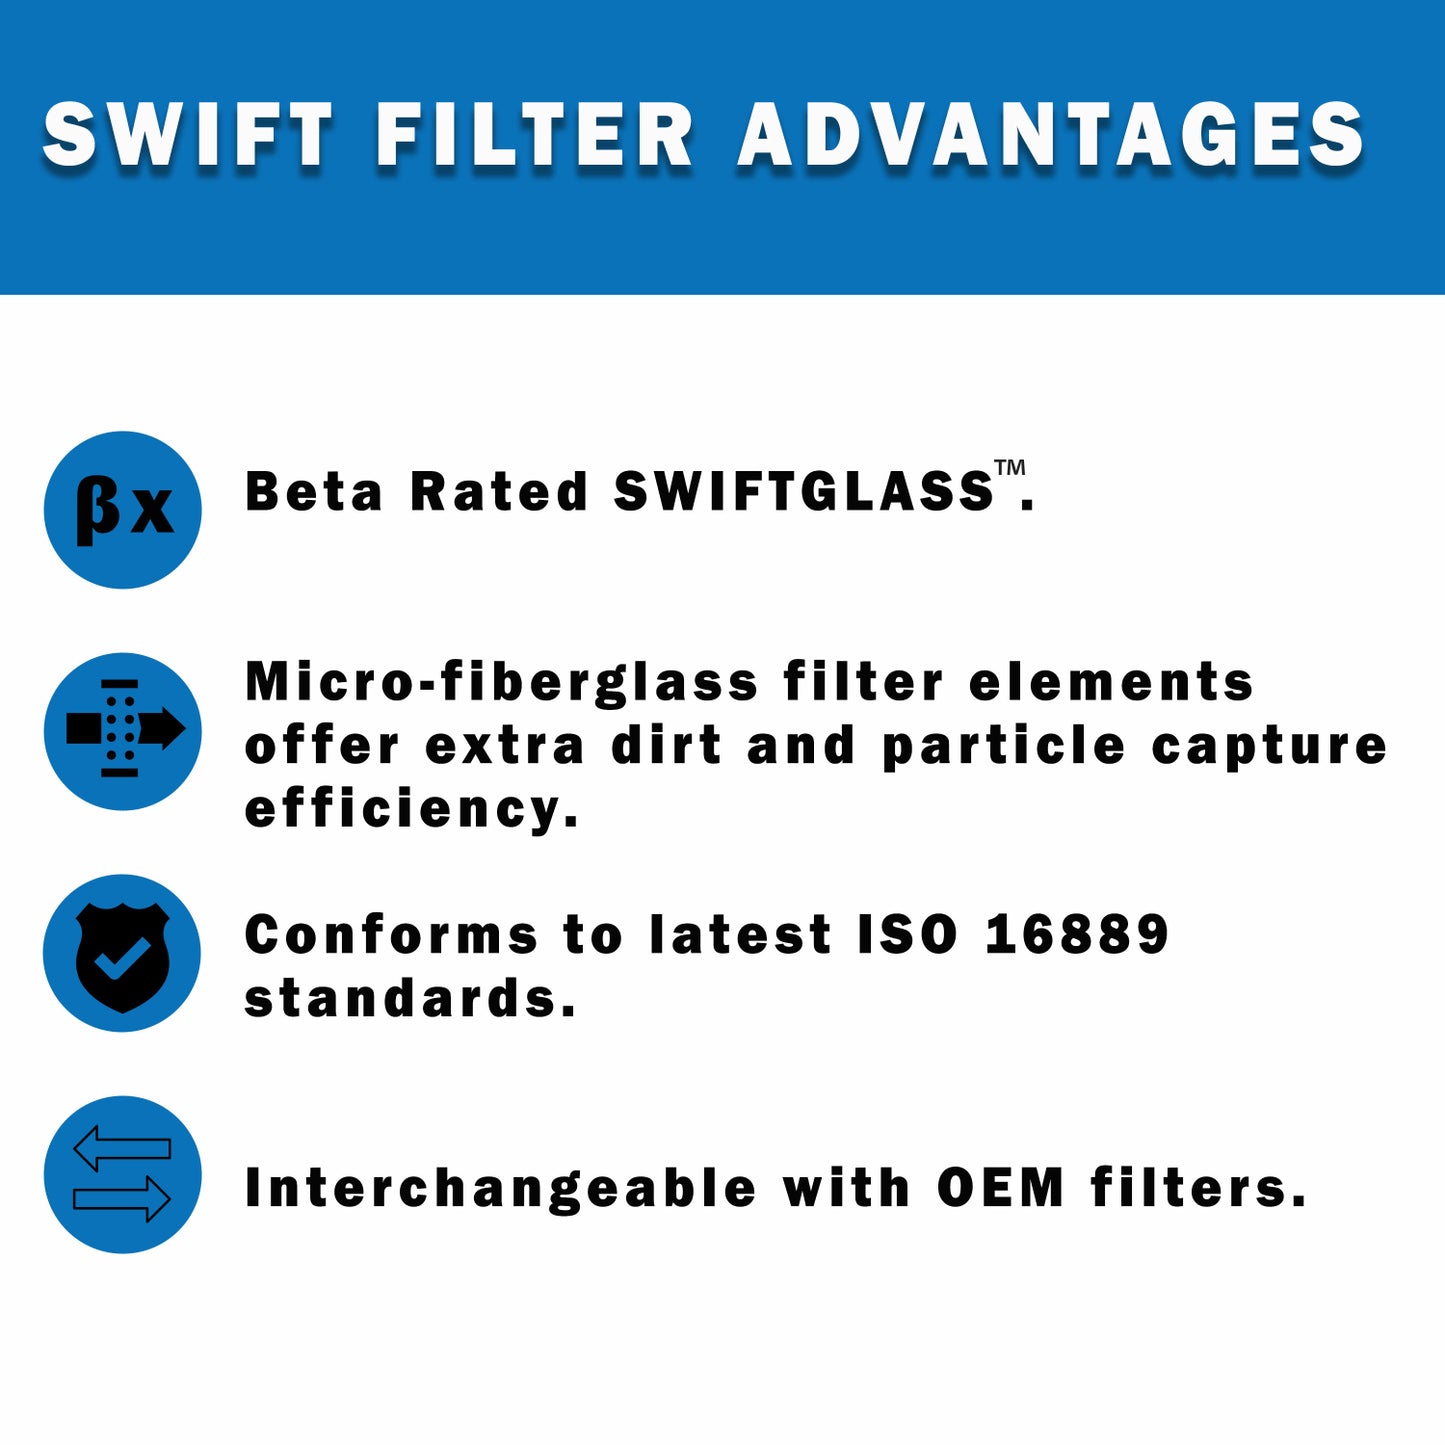 Cartridge Filter Element SF9020-8-1UM 1 Micron Microglass